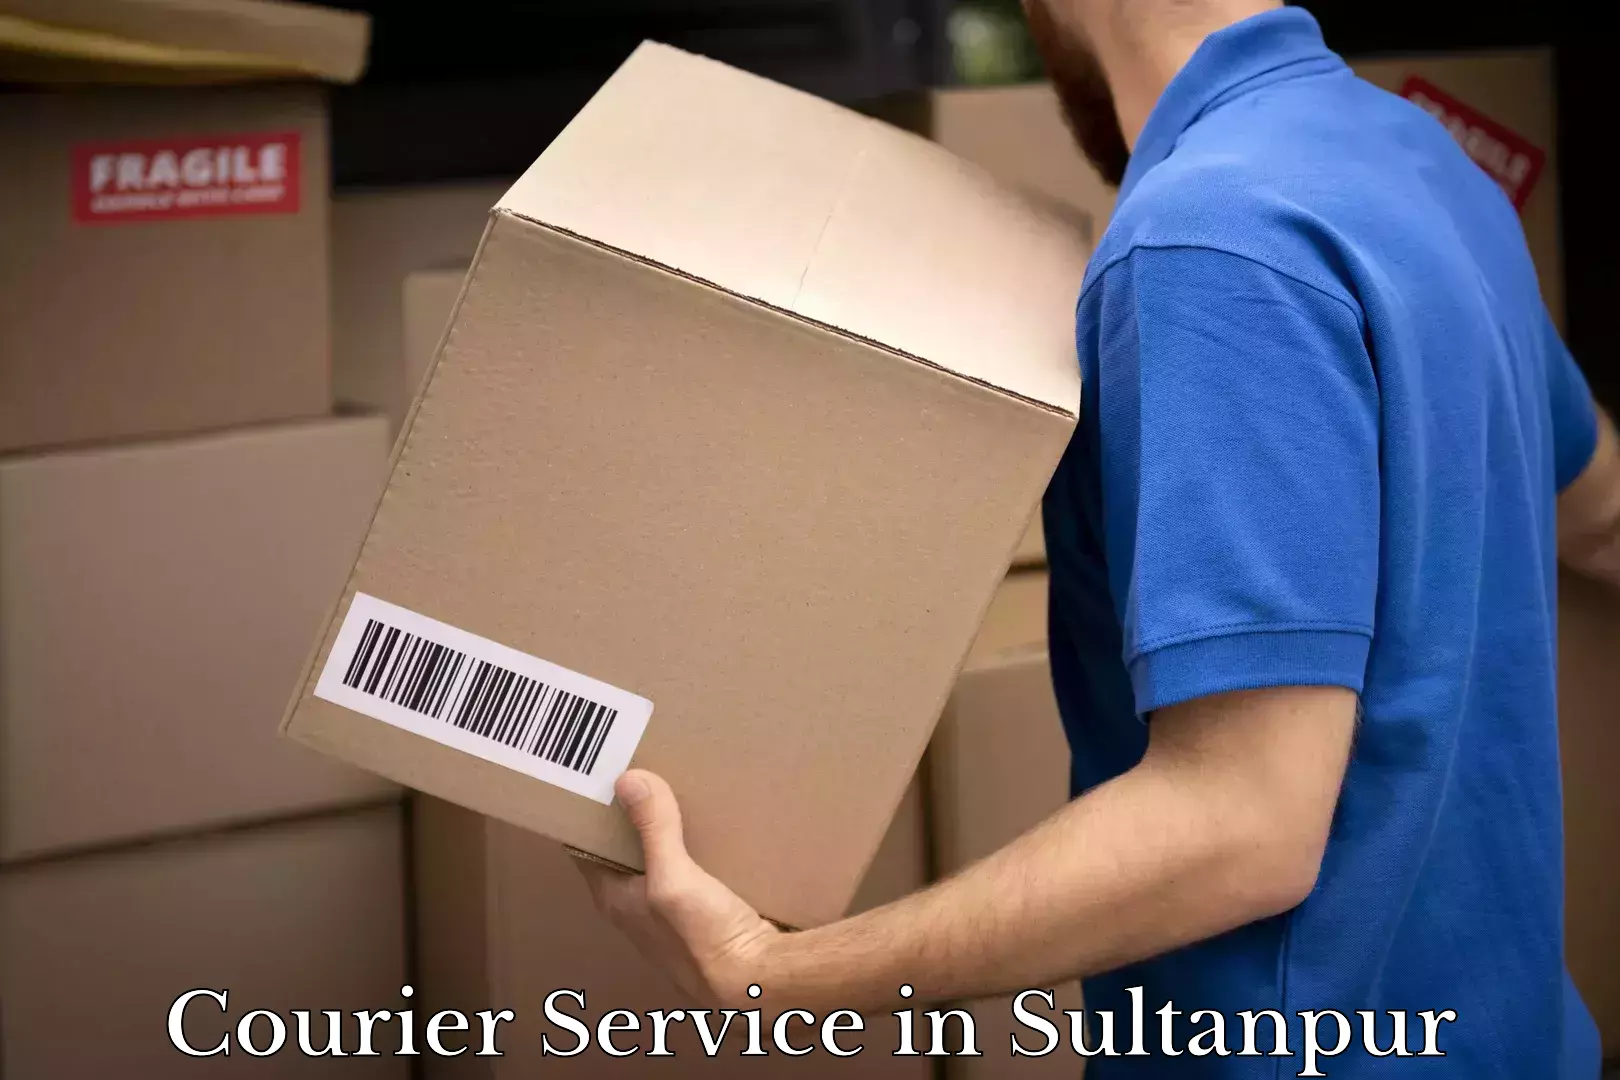 Efficient parcel service in Sultanpur